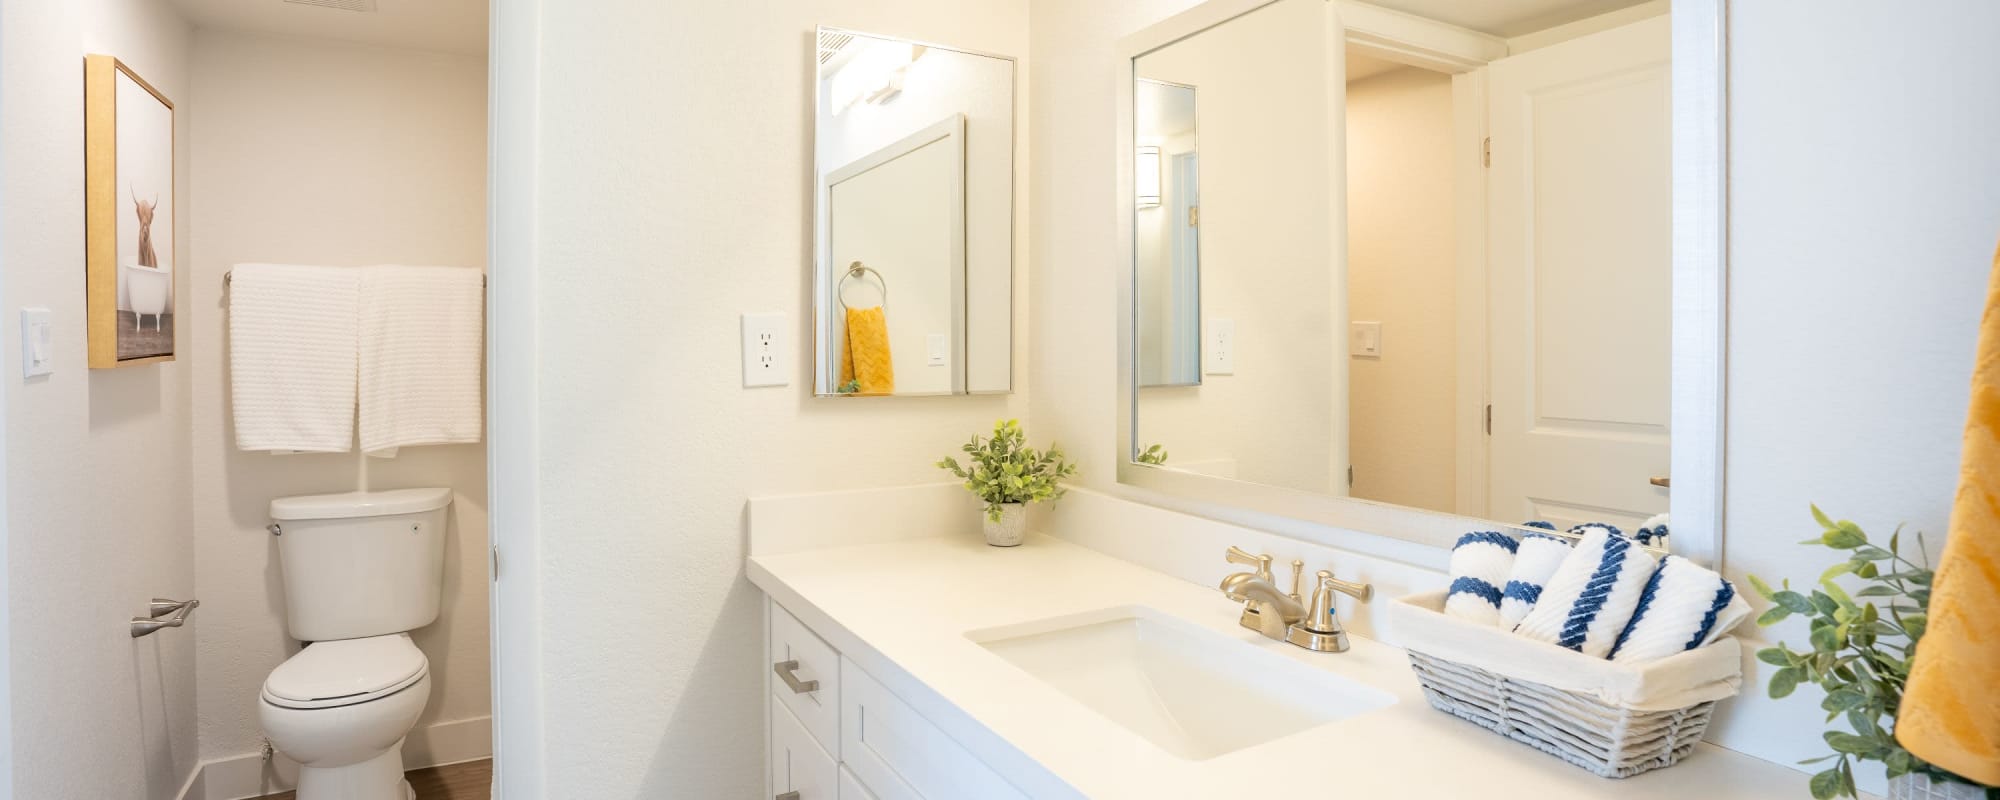 Spacious bathroom at Riverside Apartments in Tempe, Arizona